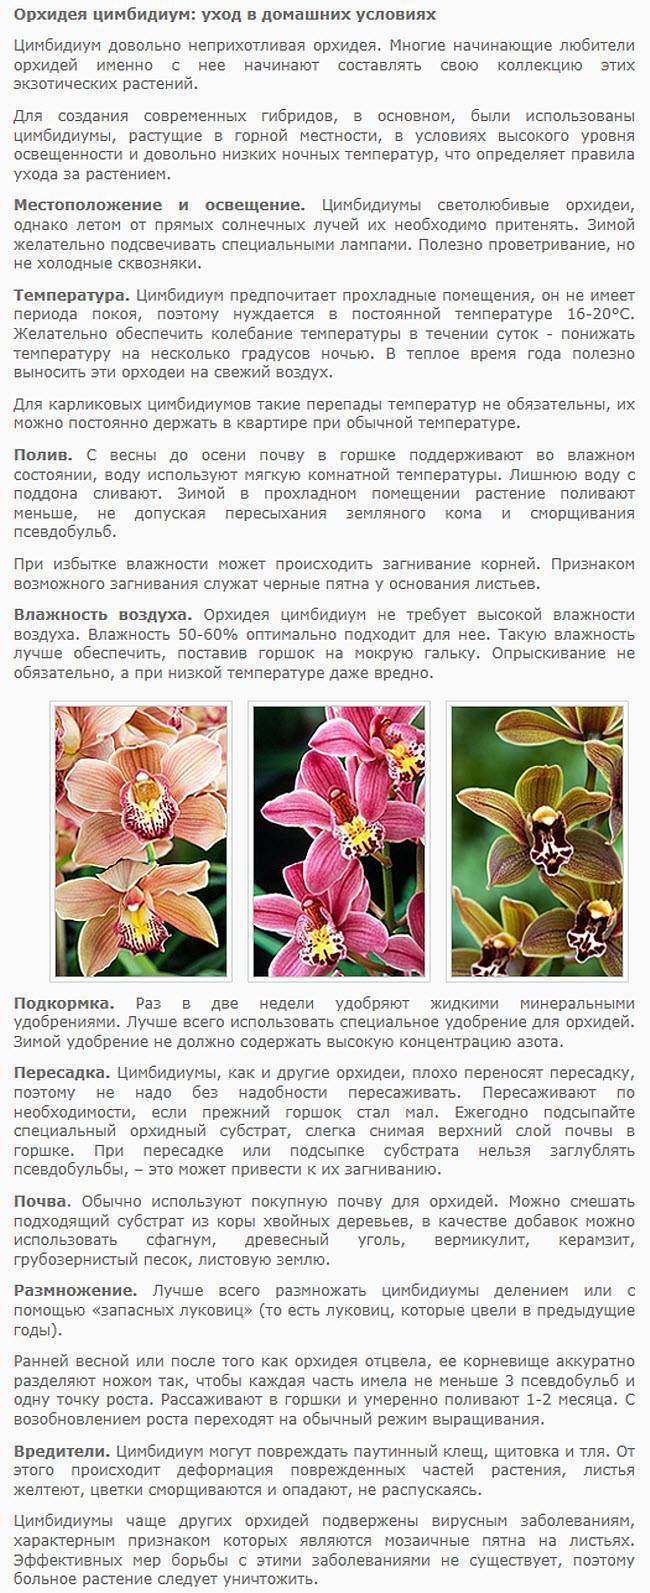 Орхидея уход в домашних условиях после покупки, фото, видео